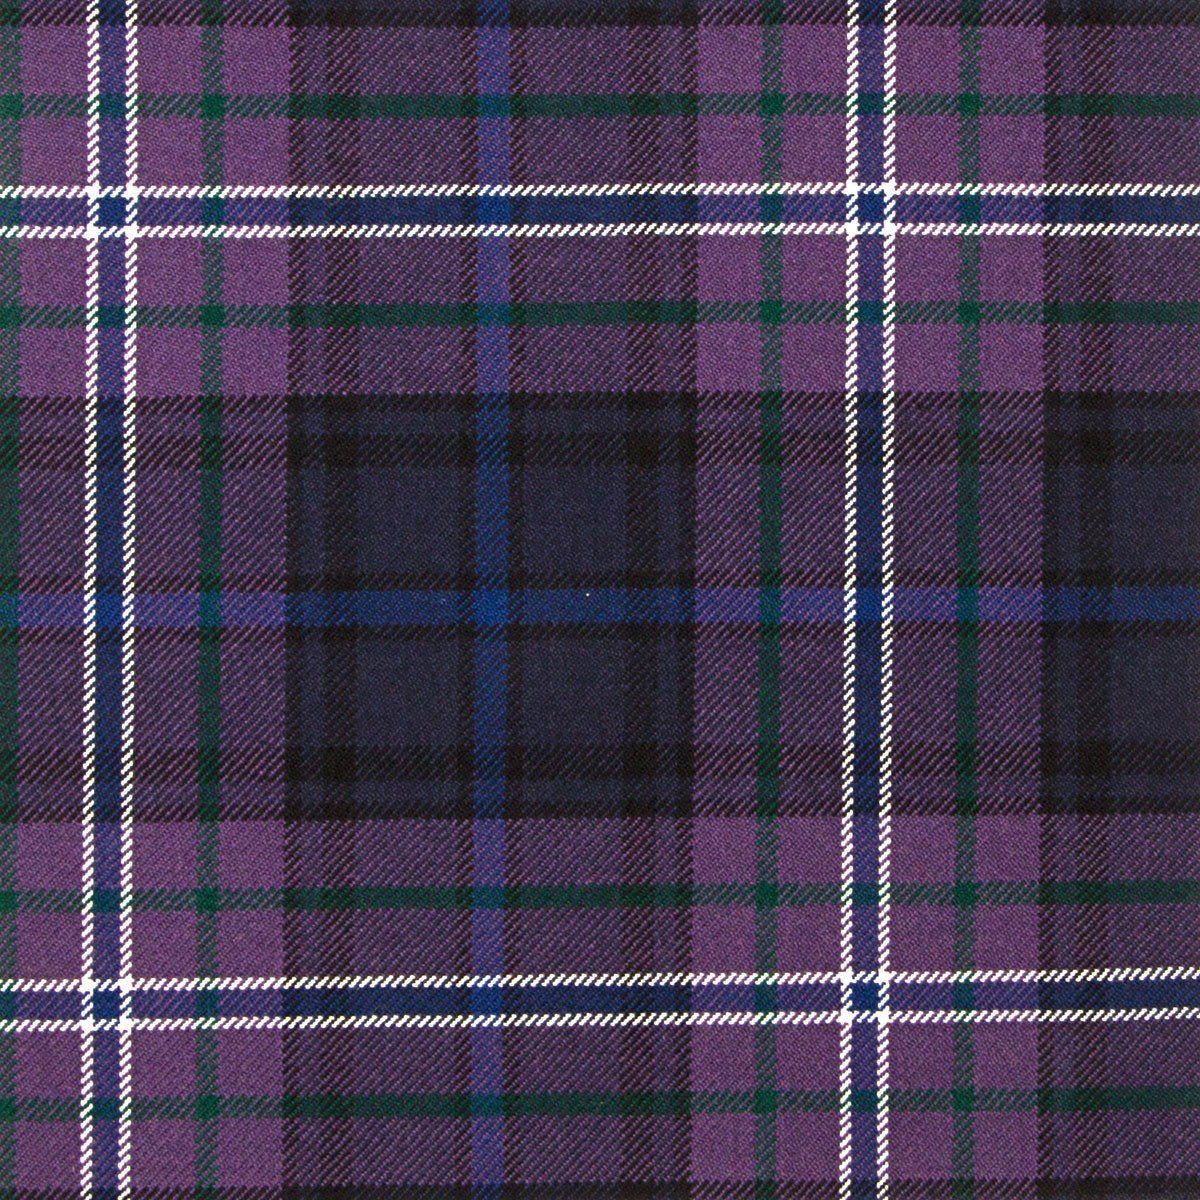 Scotland Forever Modern Tartan Heavyweight 16oz - Imperial Highland Supplies